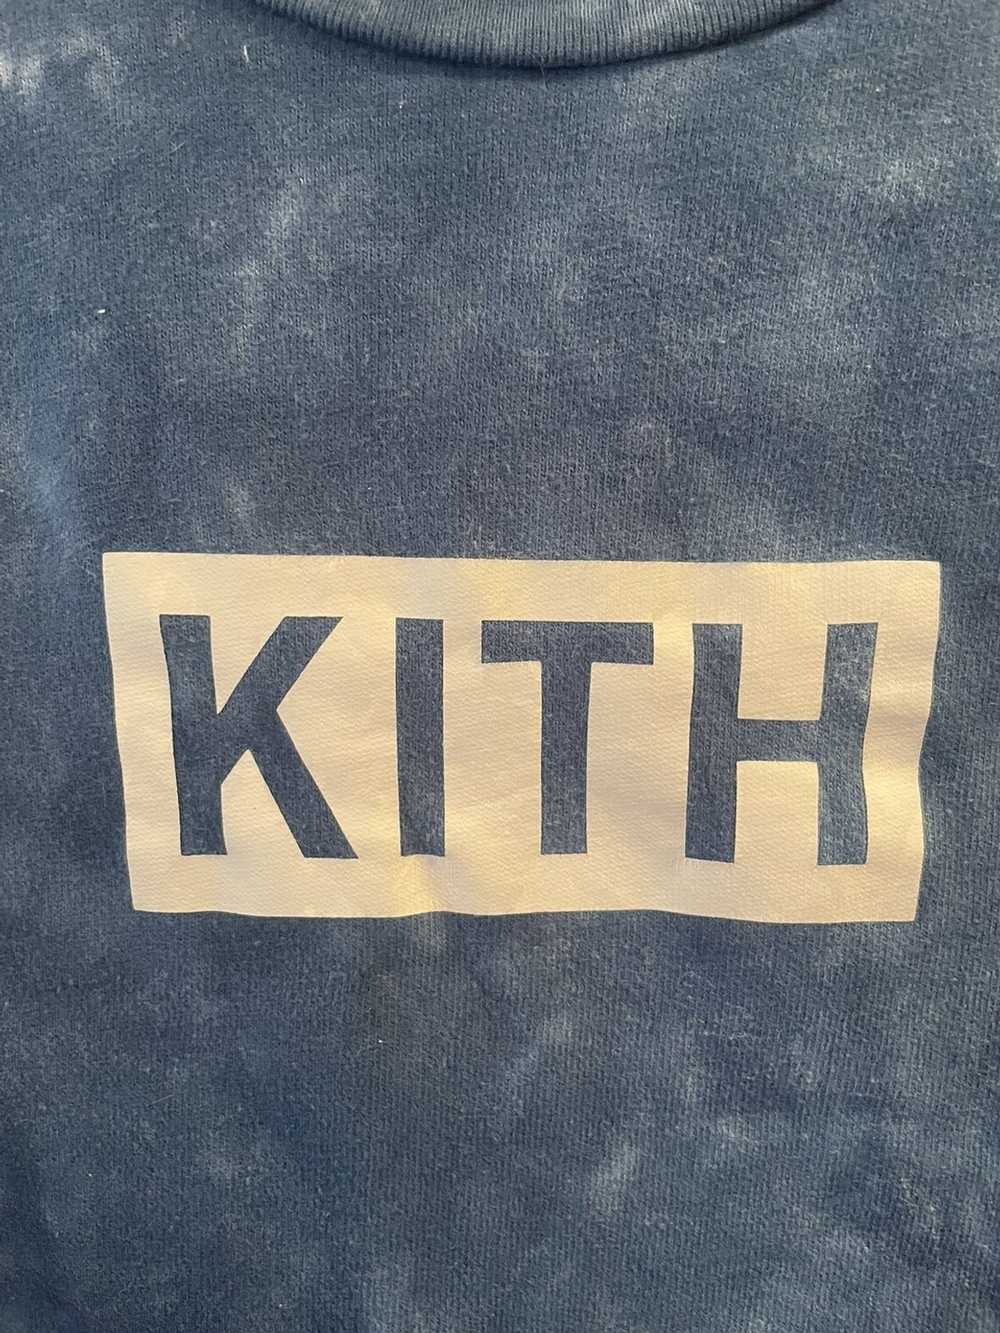 Kith Kith Box Logo Tye Dye T shirt - image 2